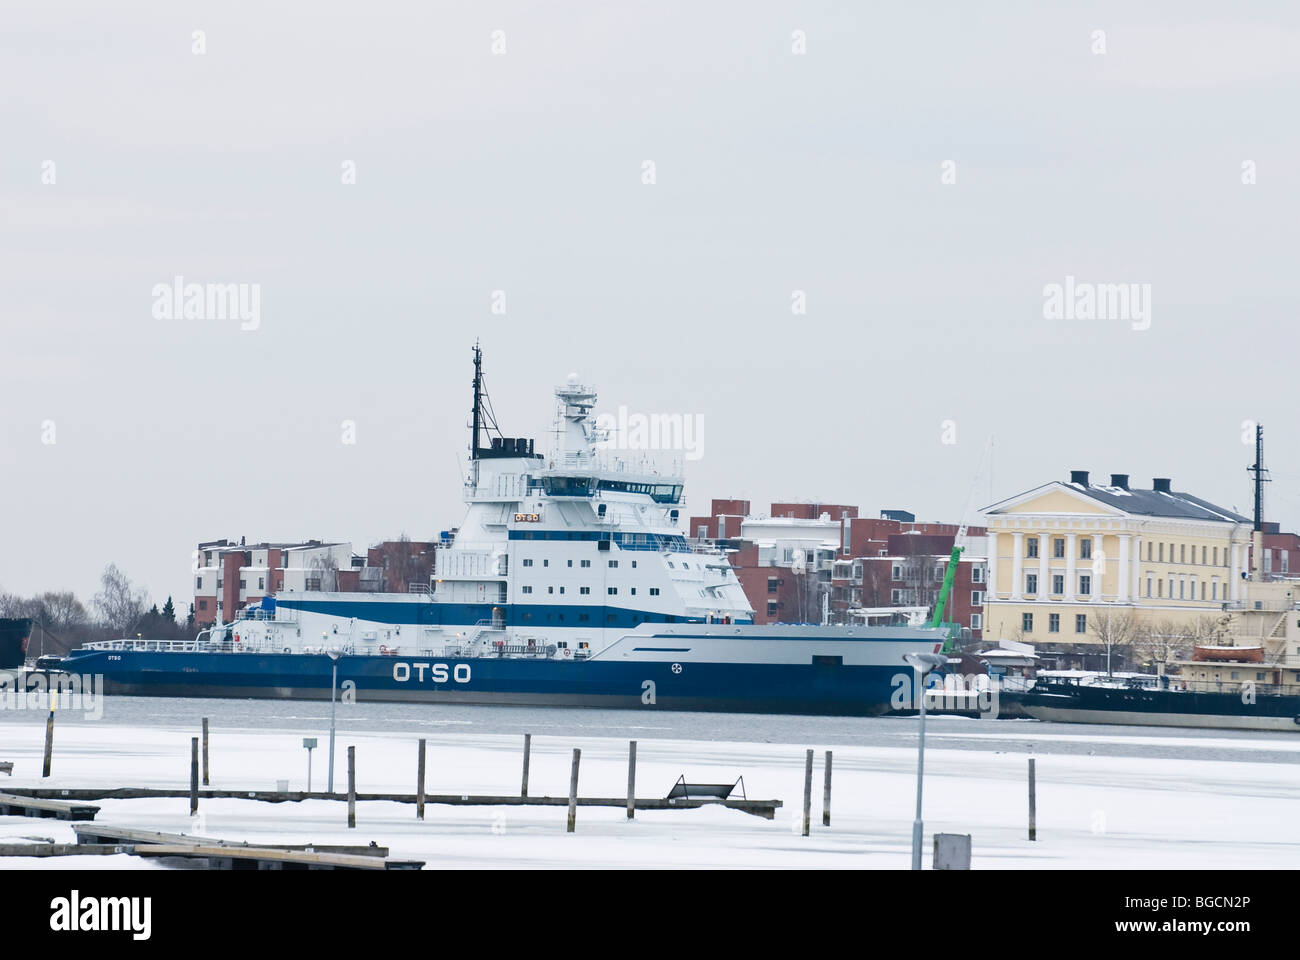 The Finnish icebreaker Otso Stock Photo